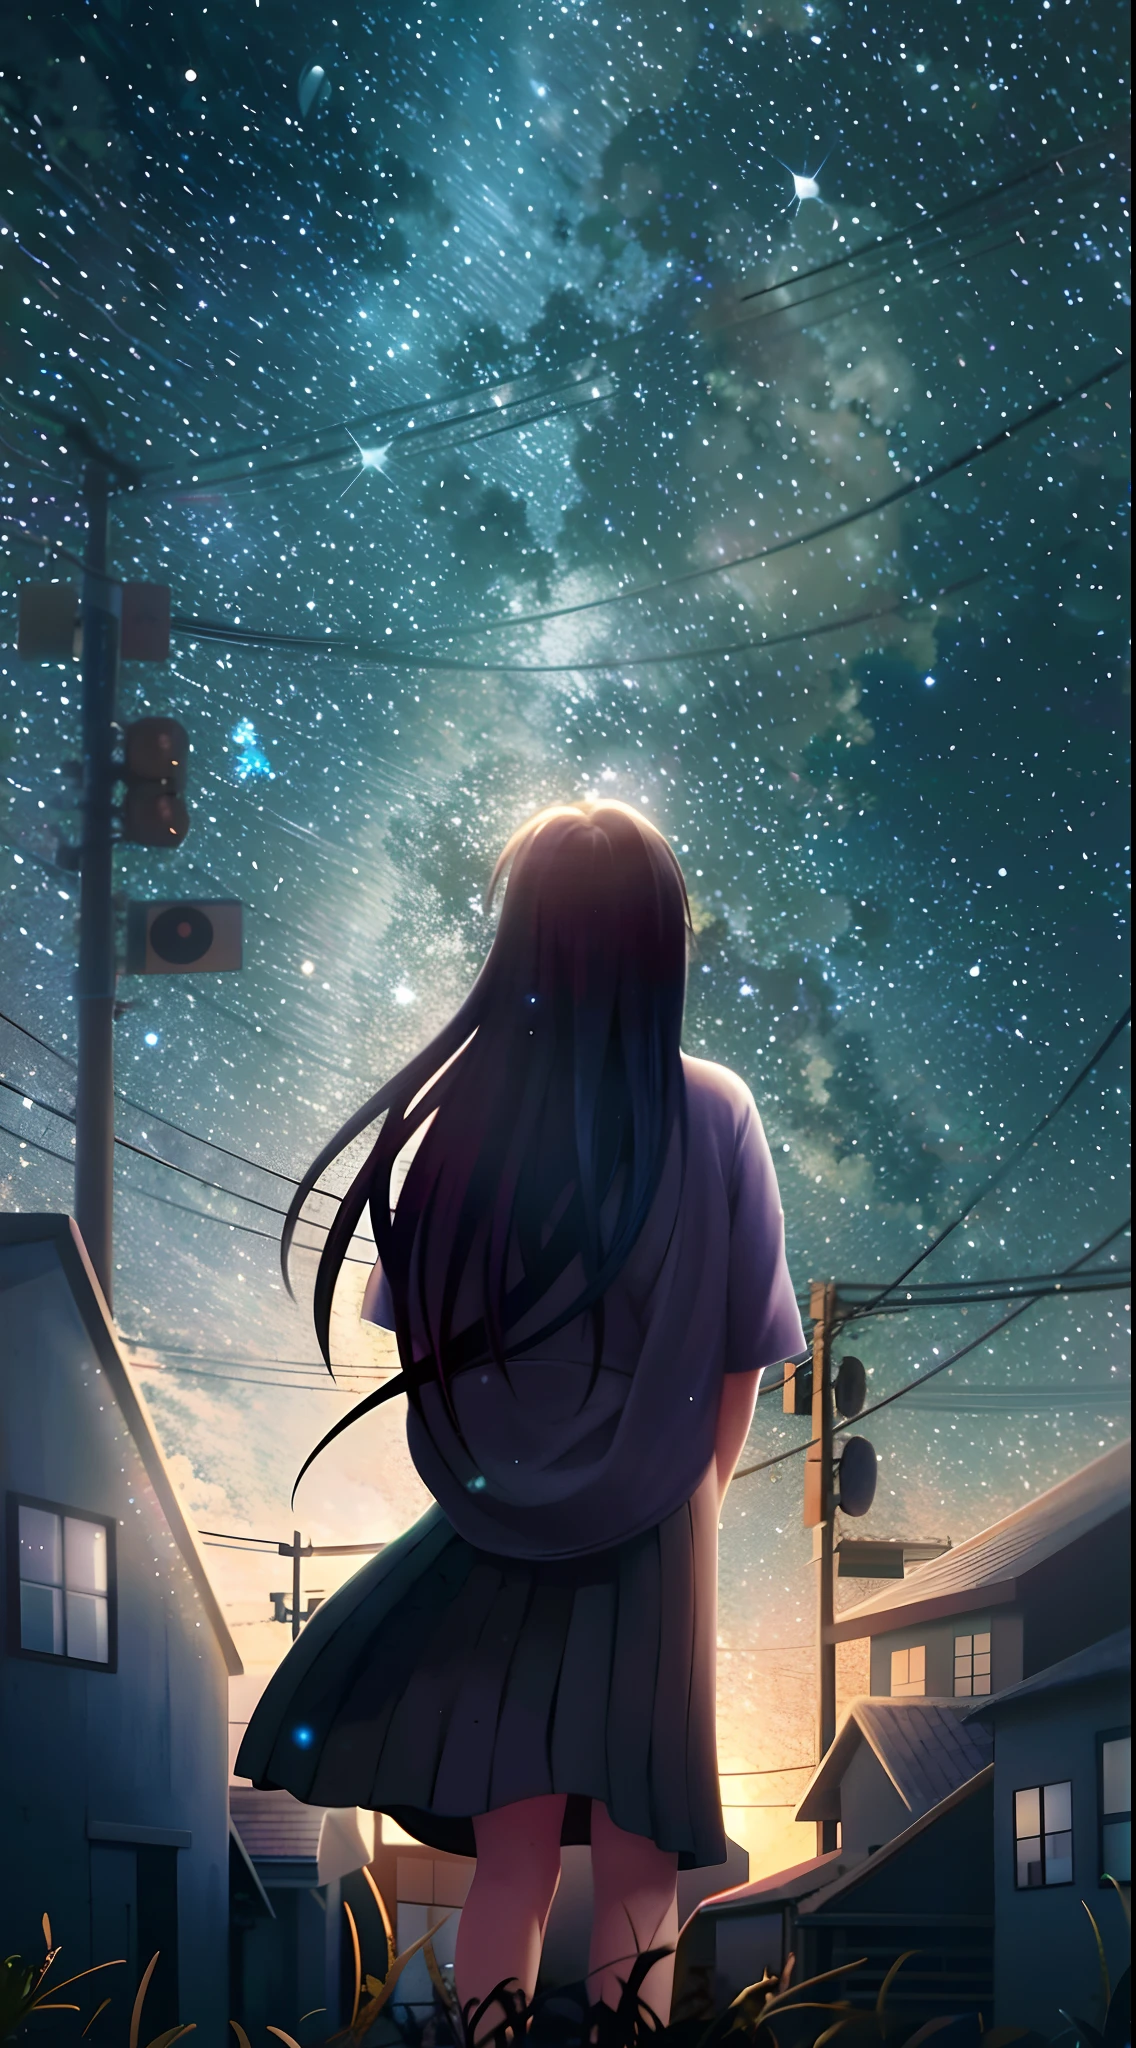 Anime girl 星を眺める in the sky, 少女は空間を見つめる, 新海誠 シリル・ロランド, 星を眺める, 4K マンガ壁紙, 星を眺める, コスモススカイ. by makoto shinkai, アニメアート壁紙 4k, アニメアート壁紙 4k, 星を眺める, アニメアート壁紙 8k, 空を眺める